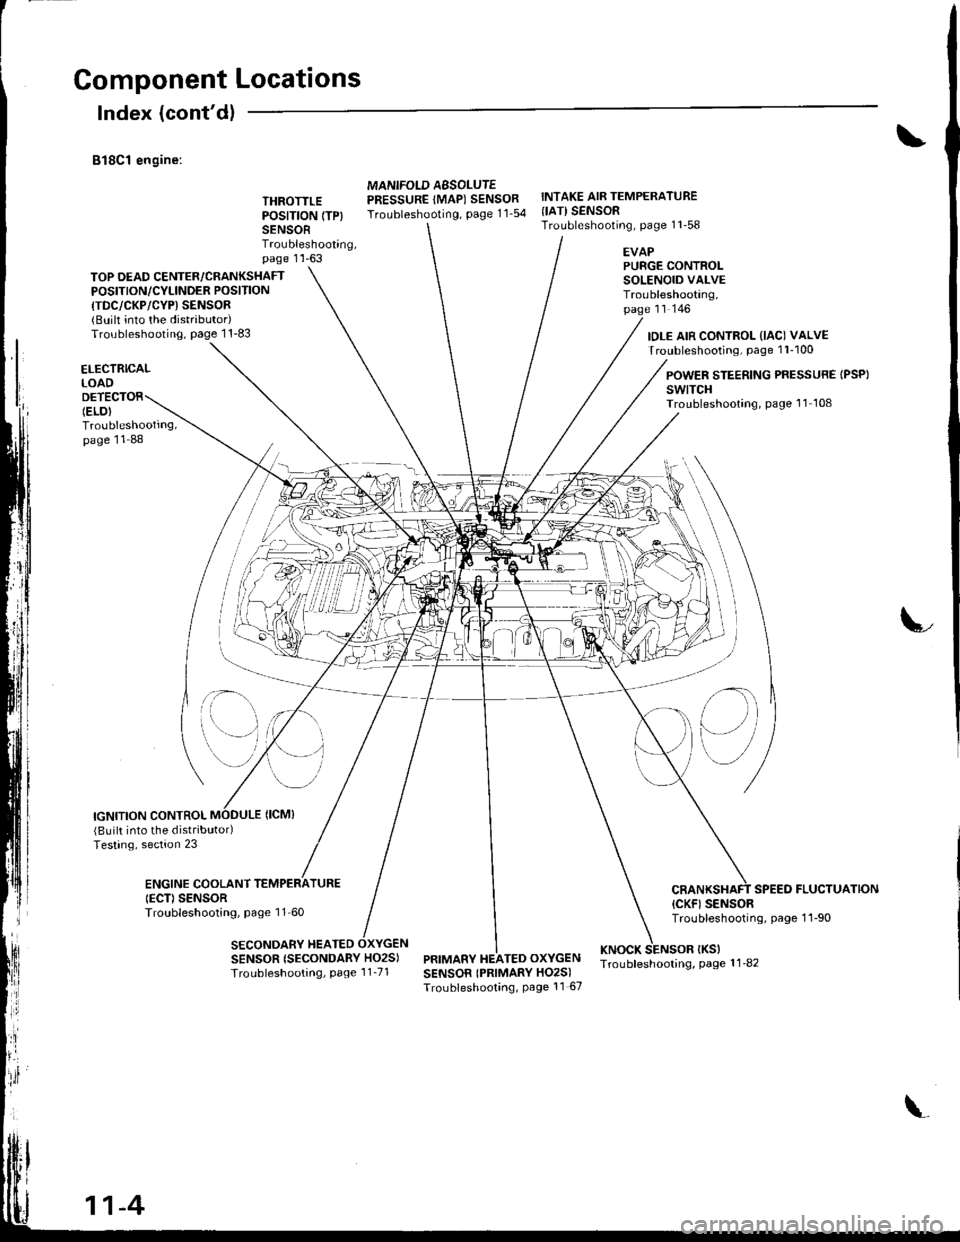 HONDA INTEGRA 1998 4.G Workshop Manual Component Locations
Index (contdl
B18C1 engine:
THROTTLEPOSITION (TP}
SENSORTroubleshooting,page 1 l -63
MANIFOLD AESOLUTEPRESSURE IMAP) SENSORTroubleshooting, page 11_54
INTAKE AIR TEMPERATURE{IATI